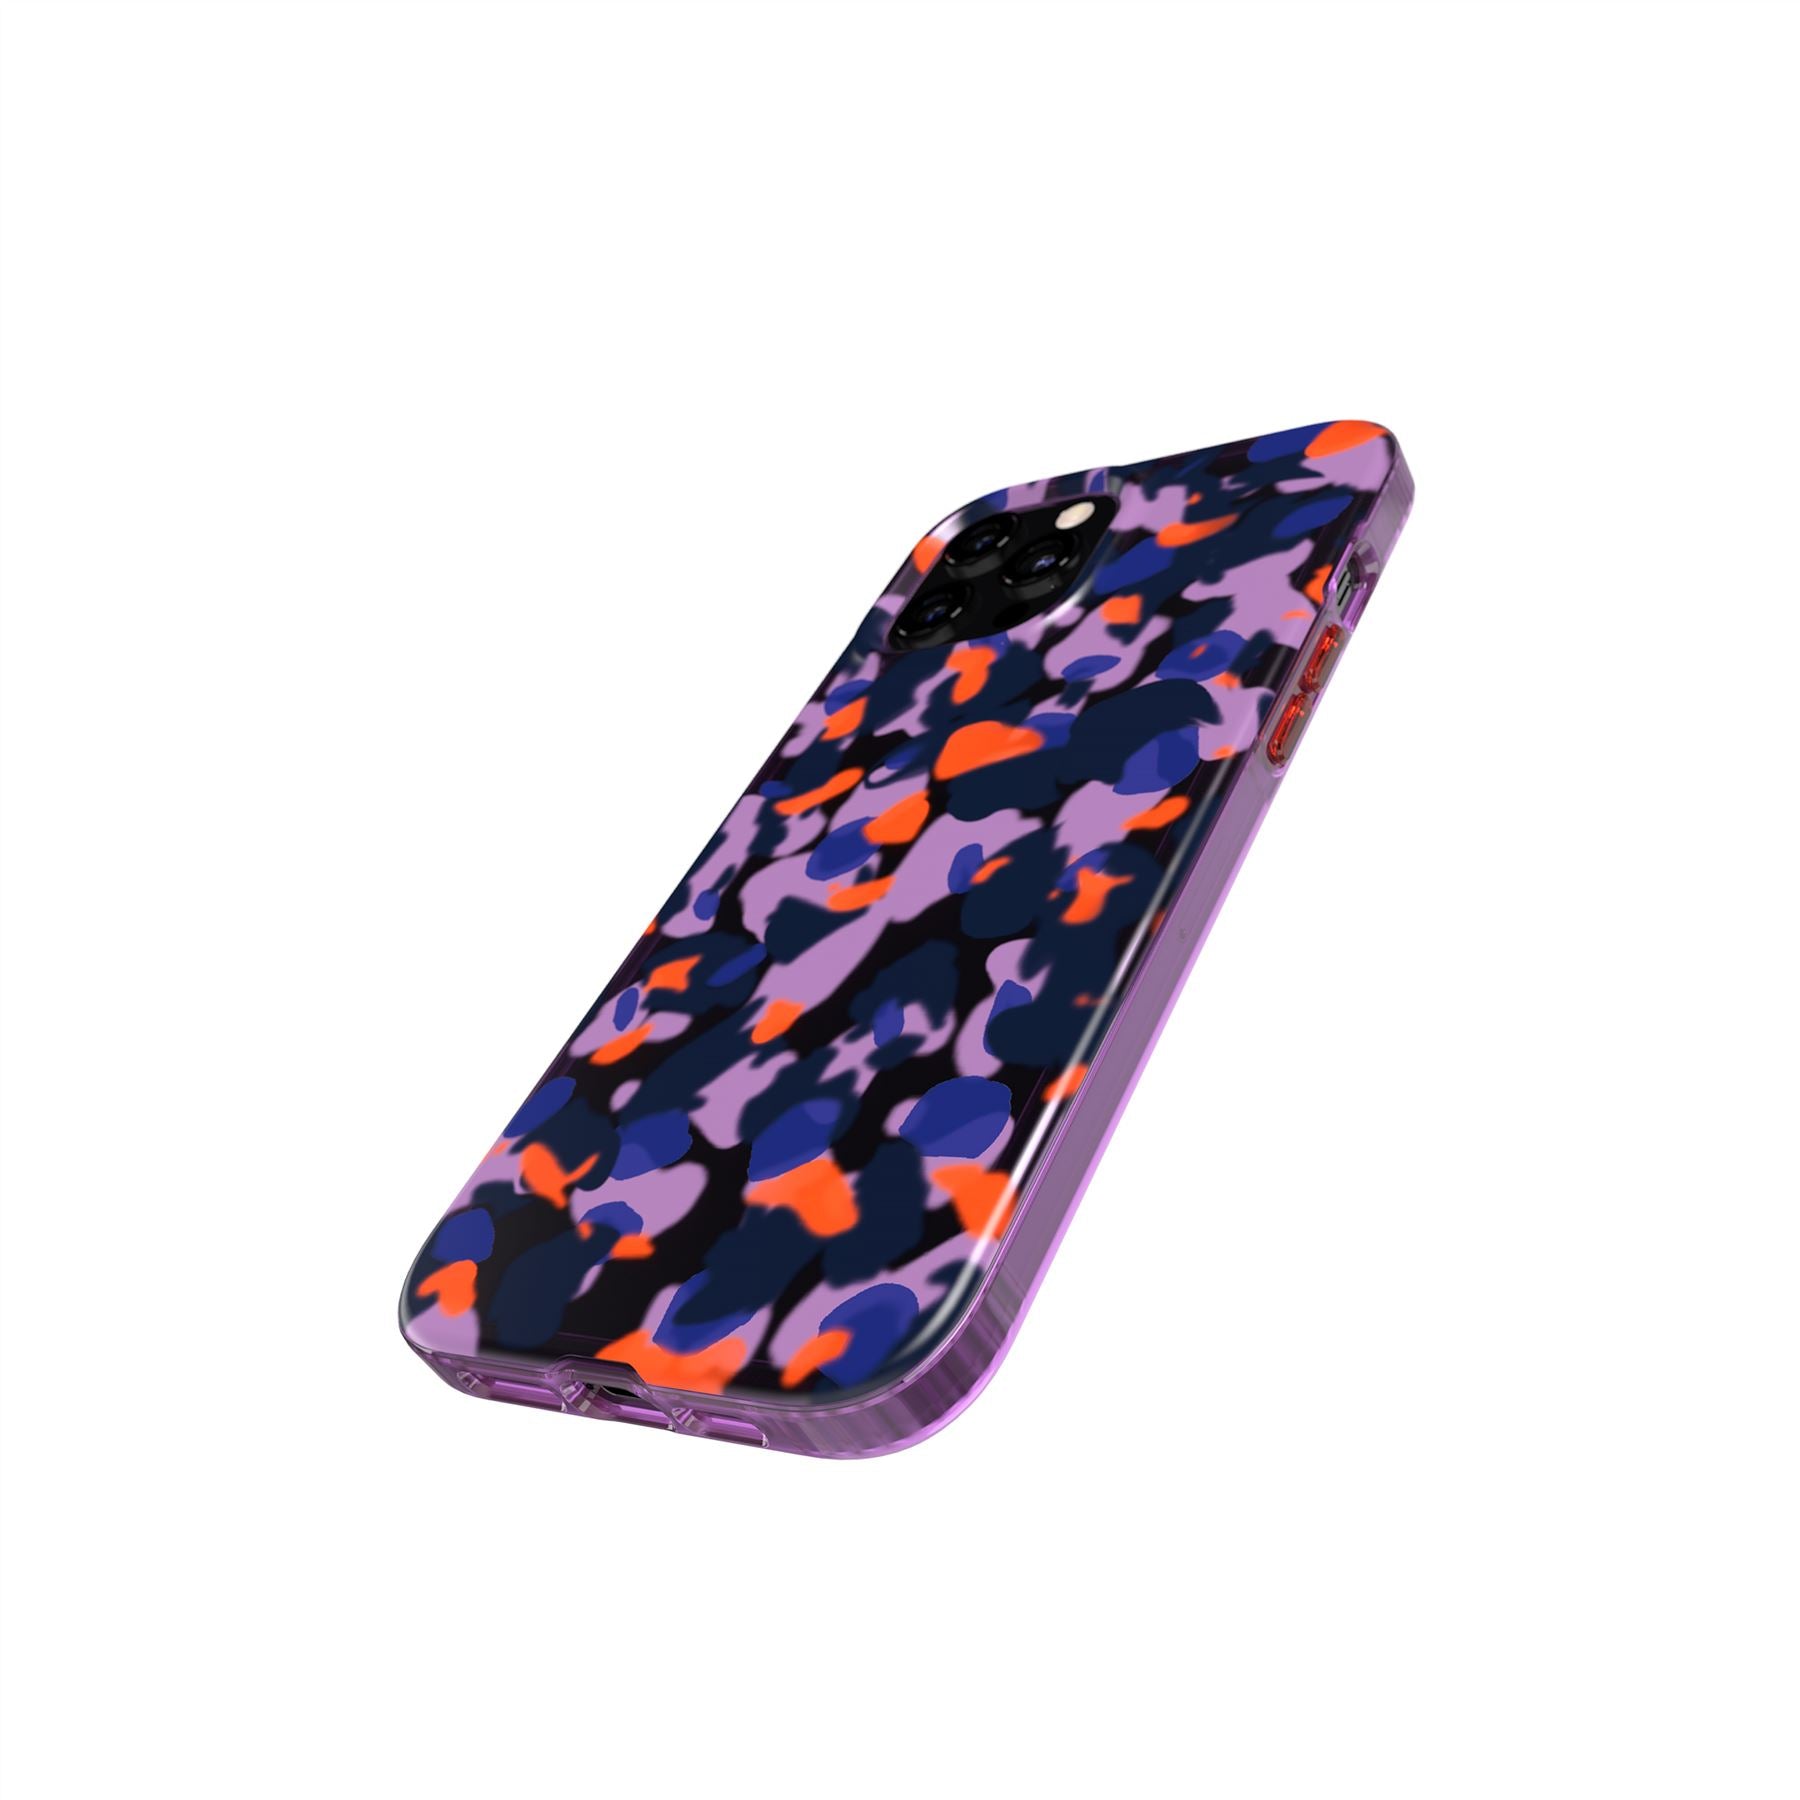 Evo Art - Apple iPhone 12 Pro Max Case - Orchid Purple